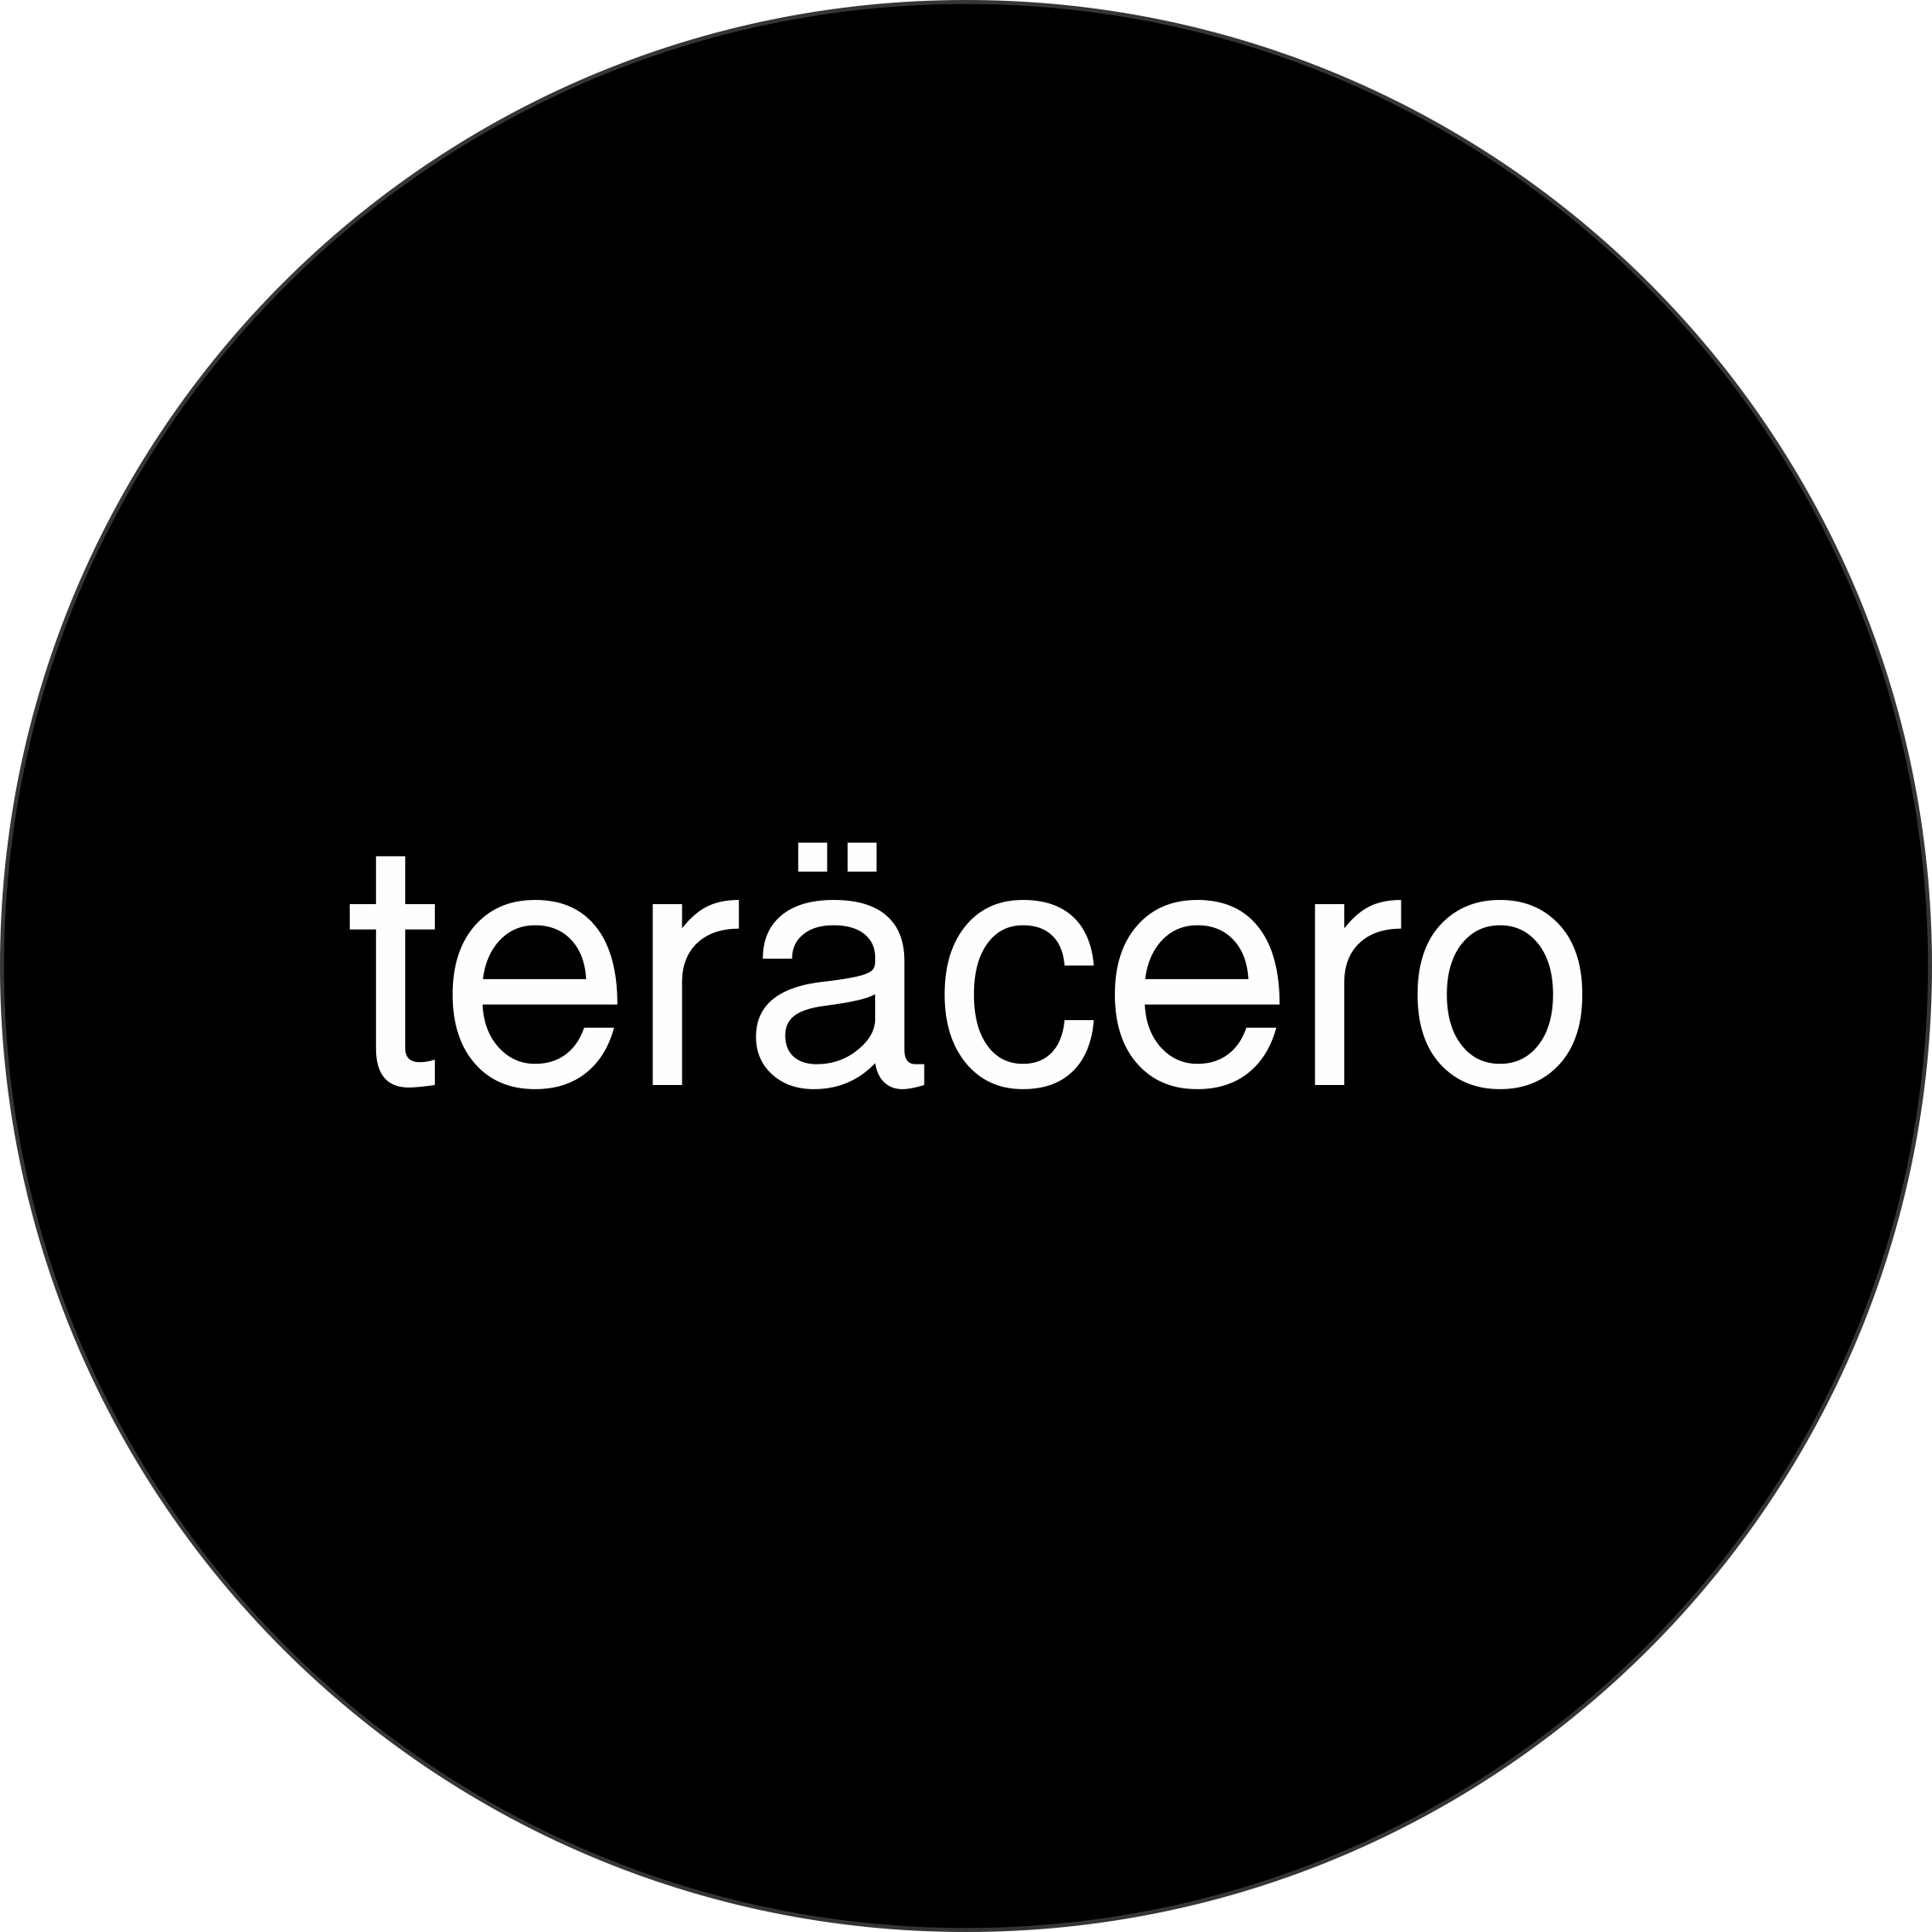 Teracero Pharma anno